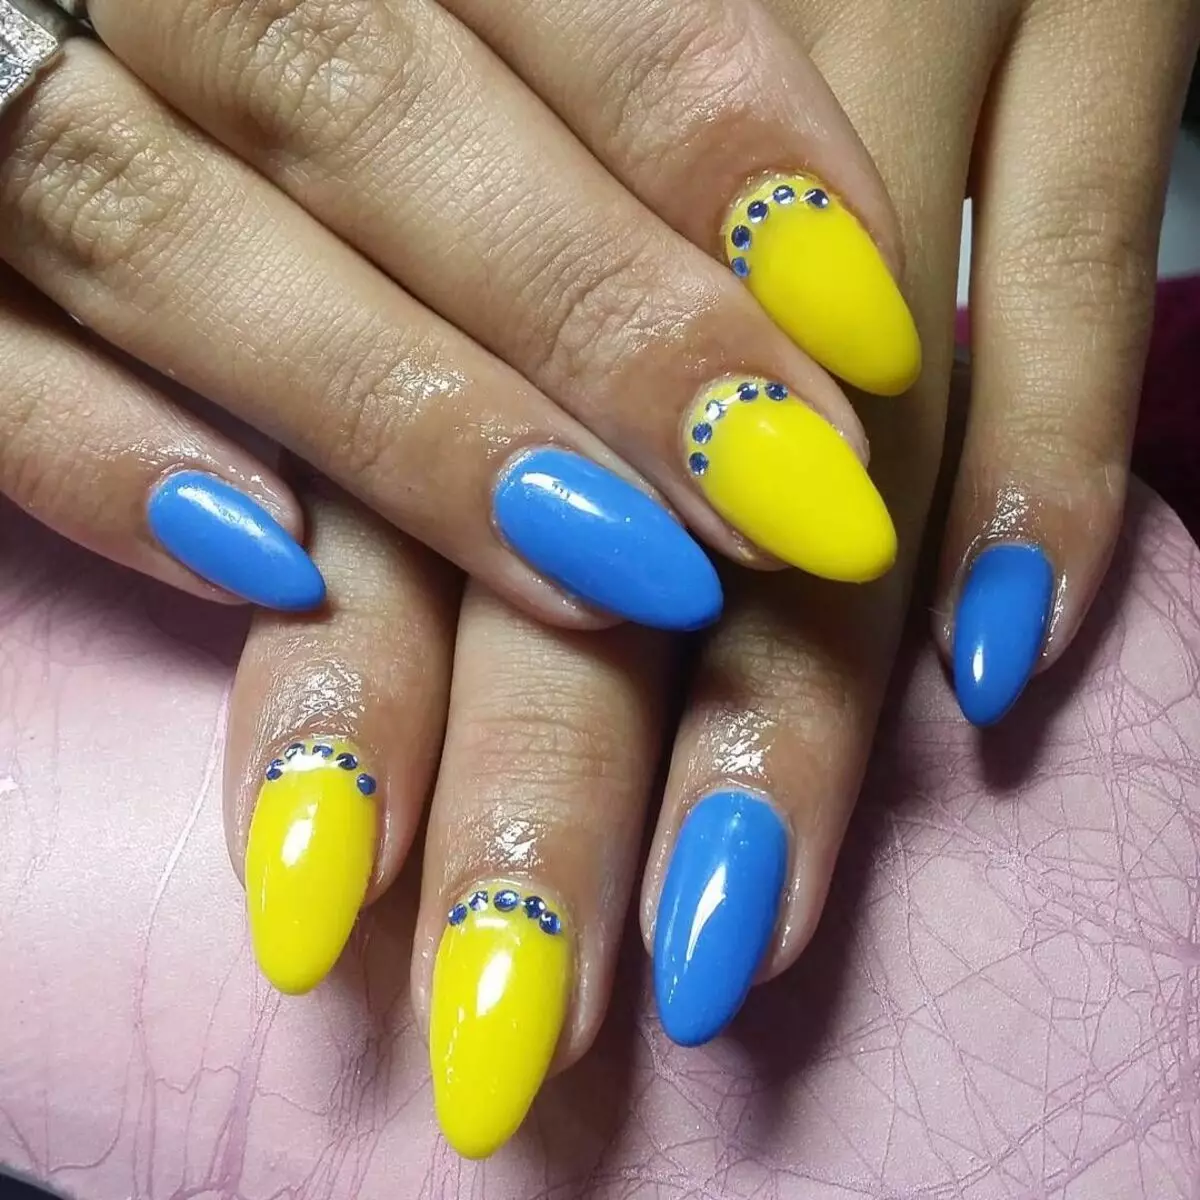 Manicura azul-amarela (51 fotos): ideas de deseño de uñas en tons amarelos e azuis 24468_26